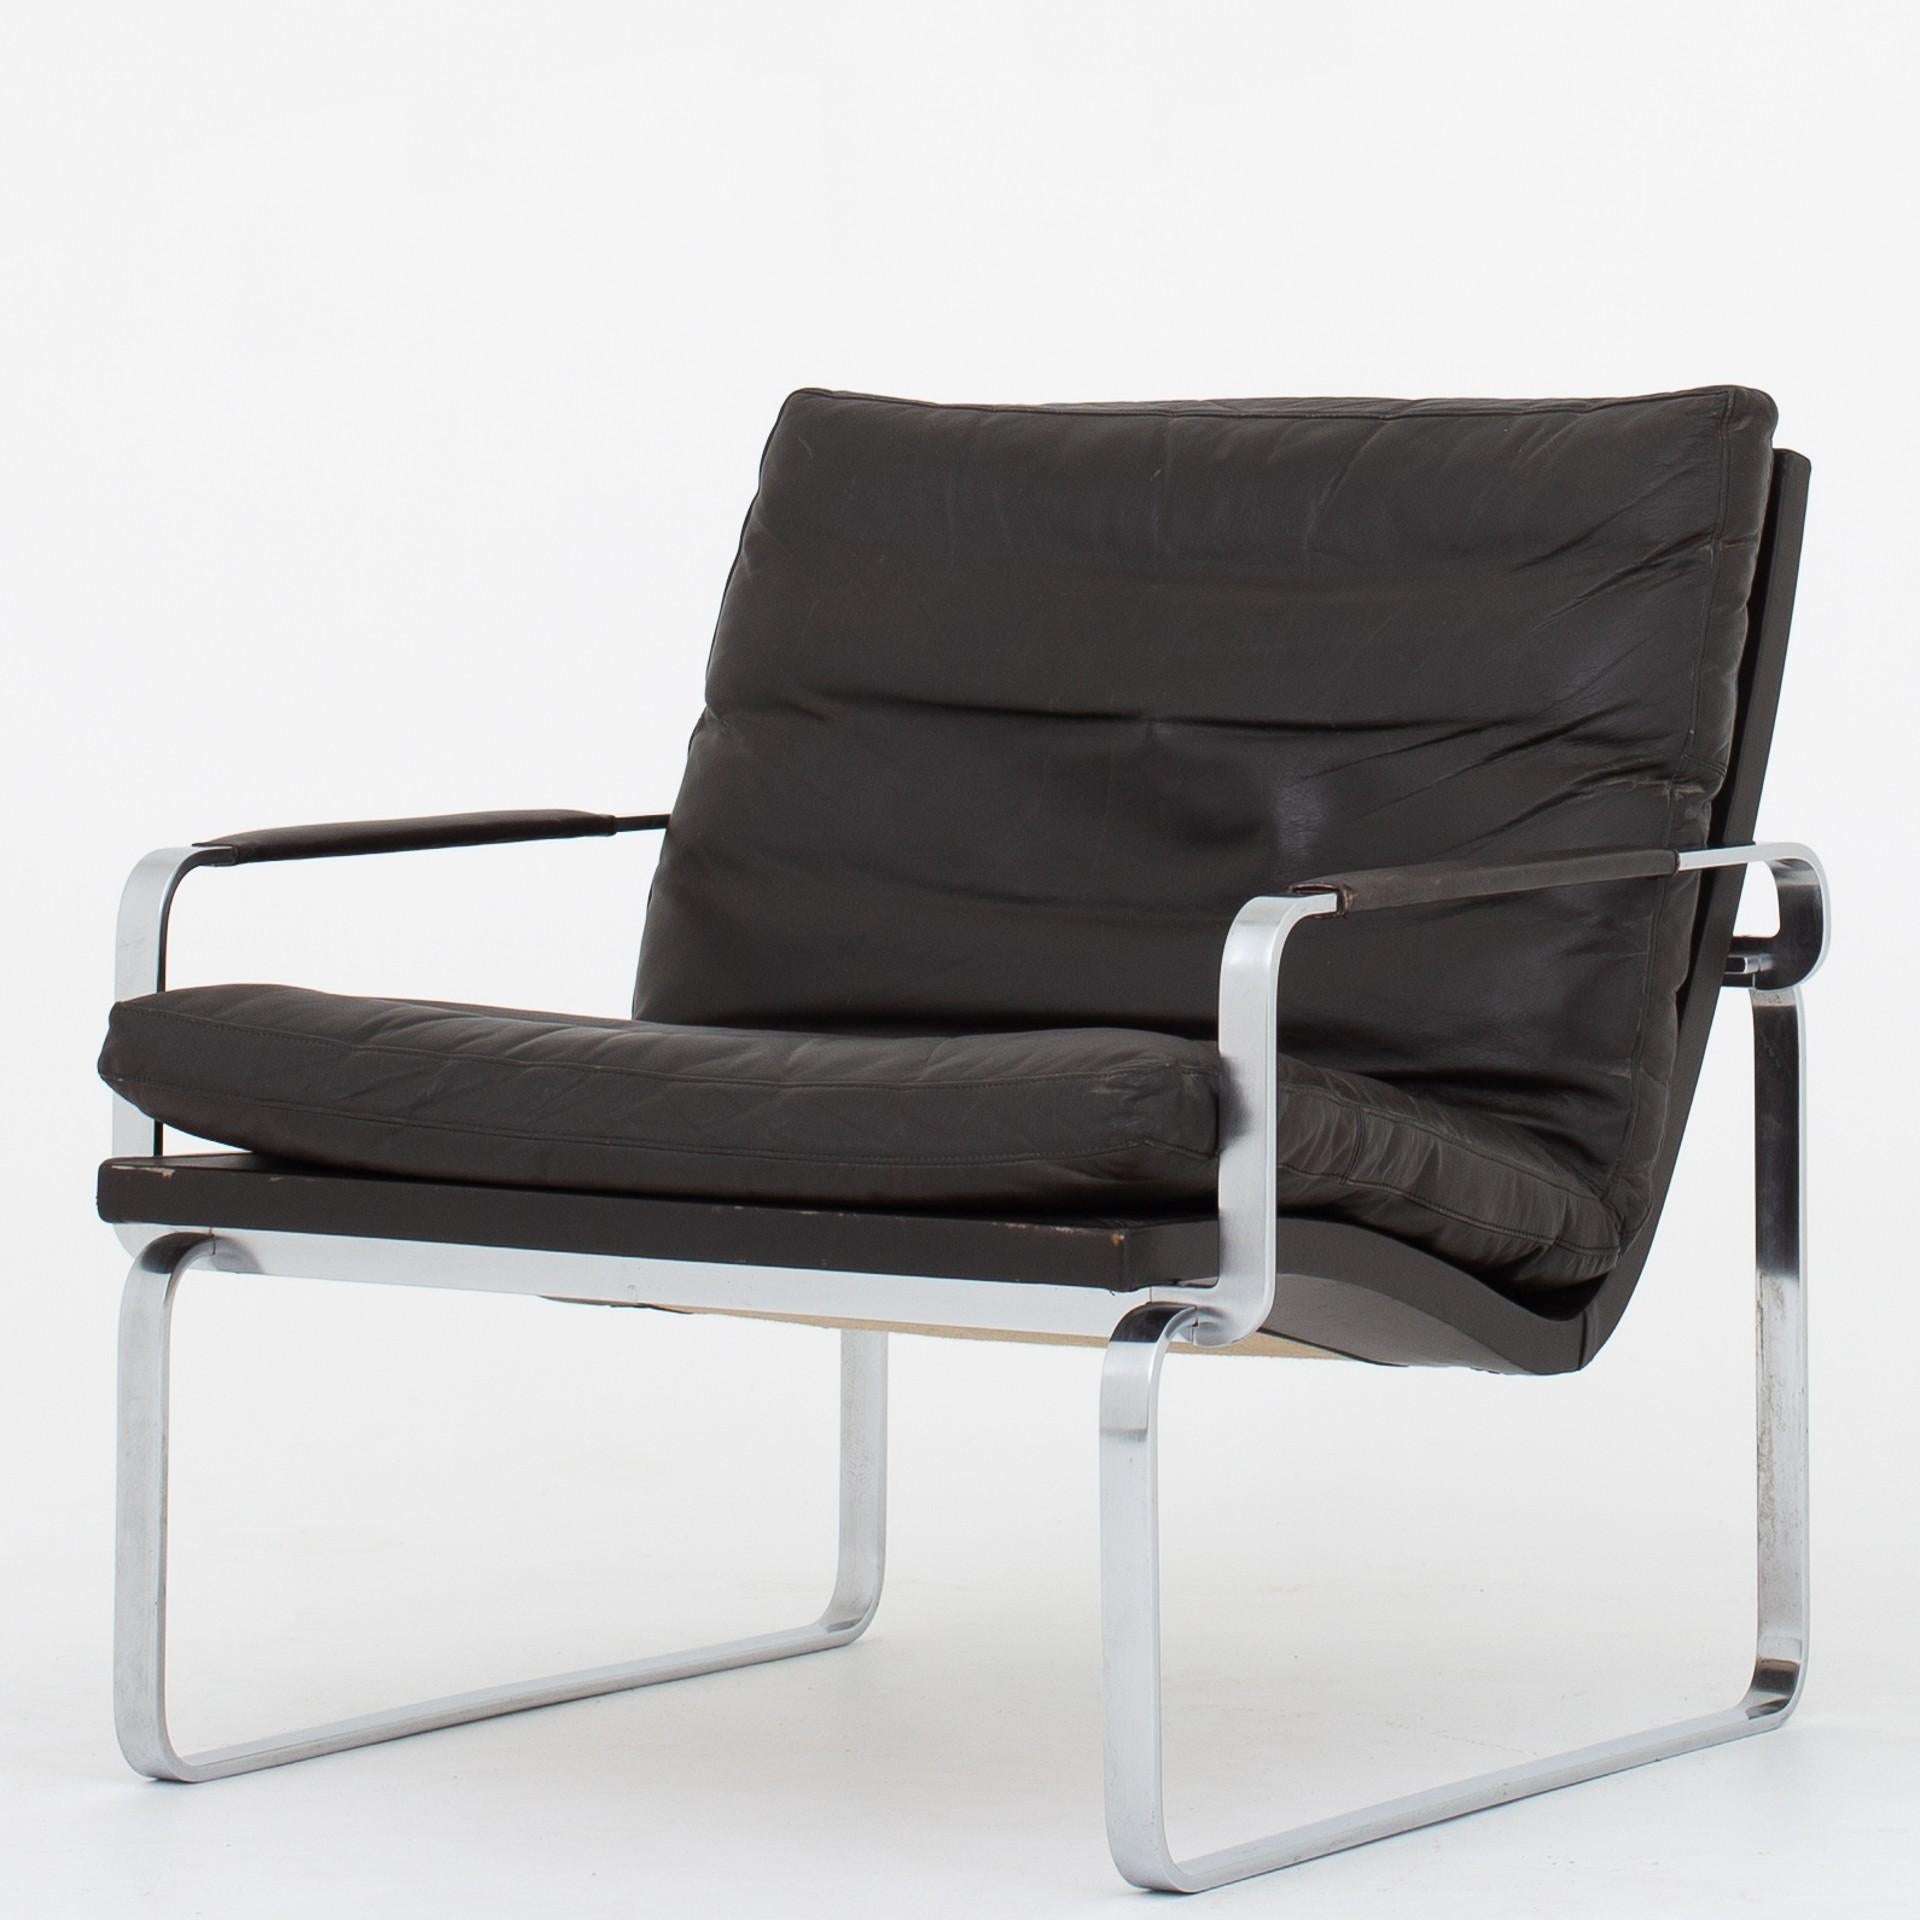 Two BO 91 - Easy chairs in original dark brown leather w. frame in chromed steel. Maker BO-EX.